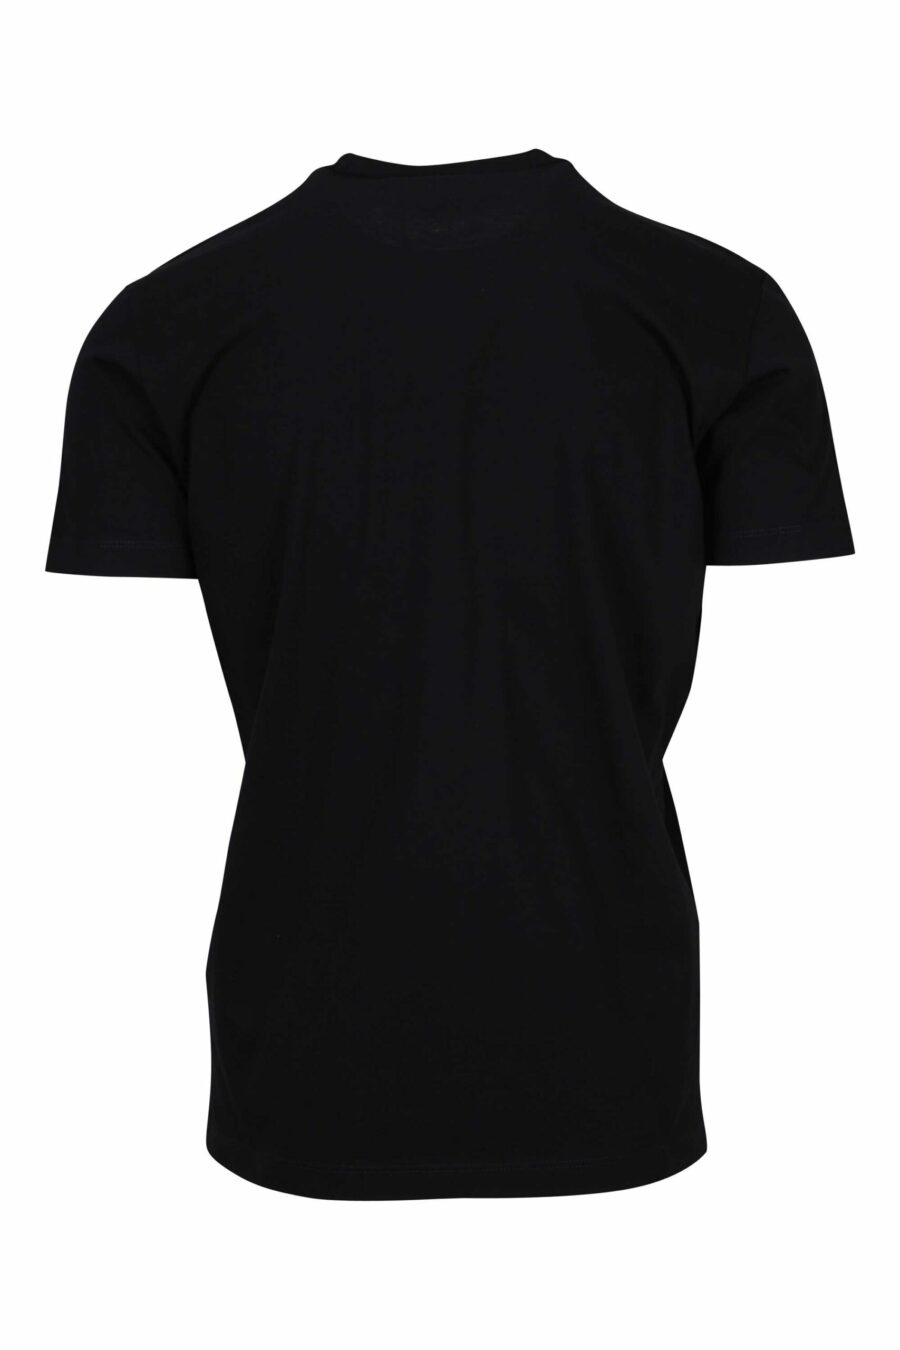 Black T-shirt with maxilogo "D2" flag - 8054148332518 1 scaled